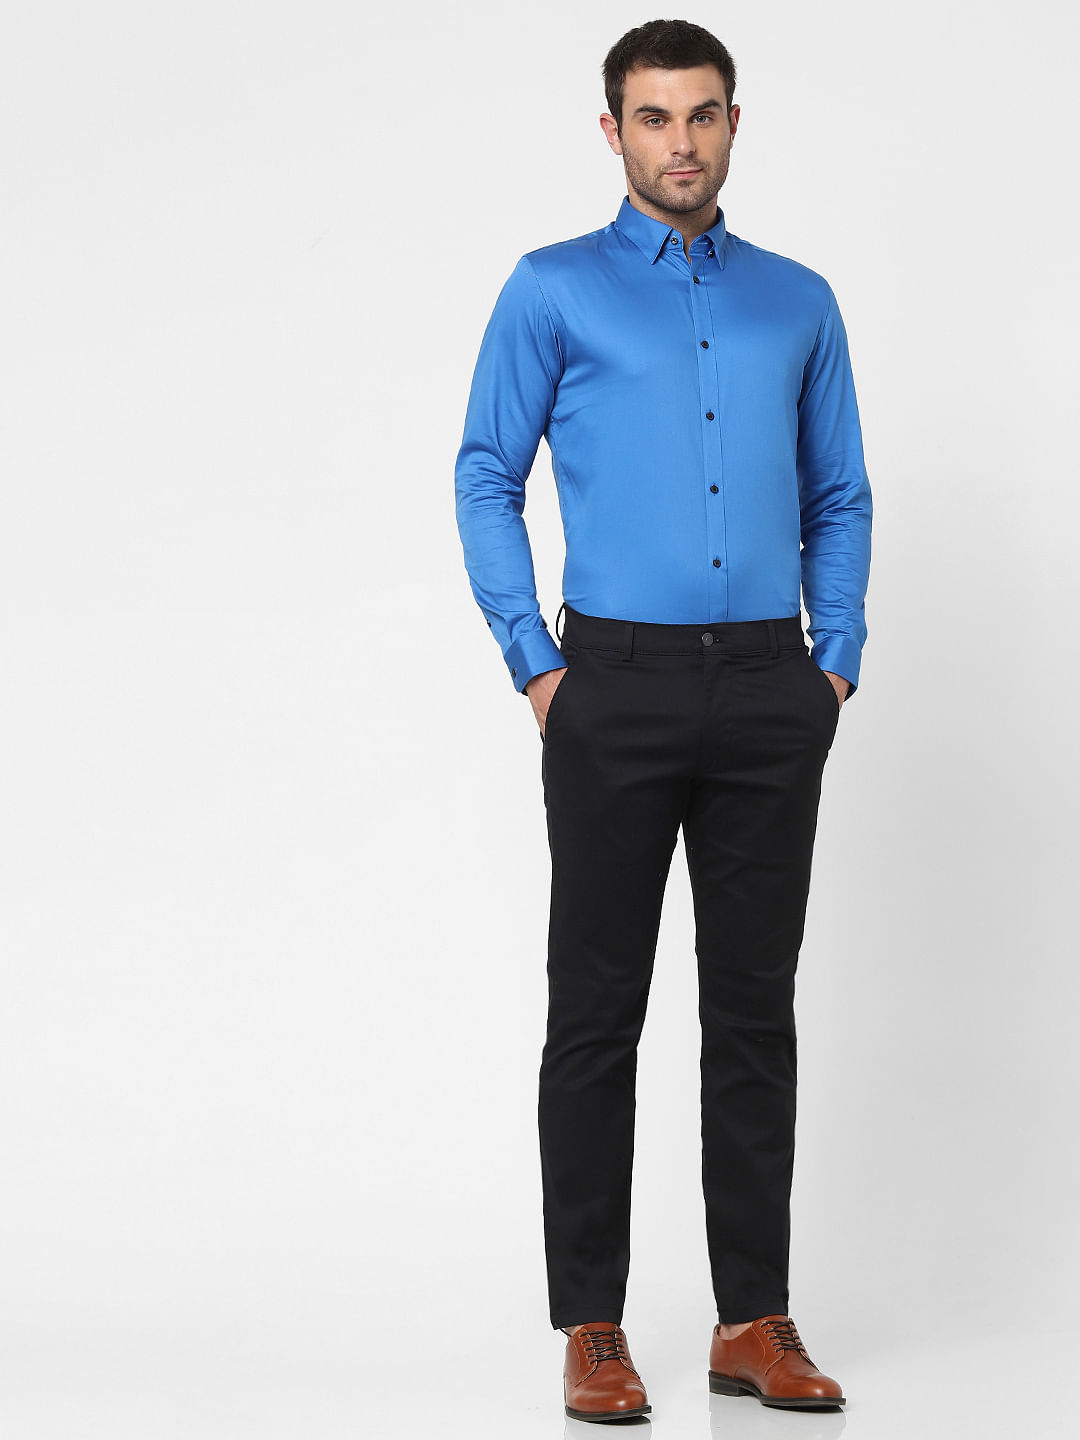 Does a blue dress shirt match black pants? - Quora